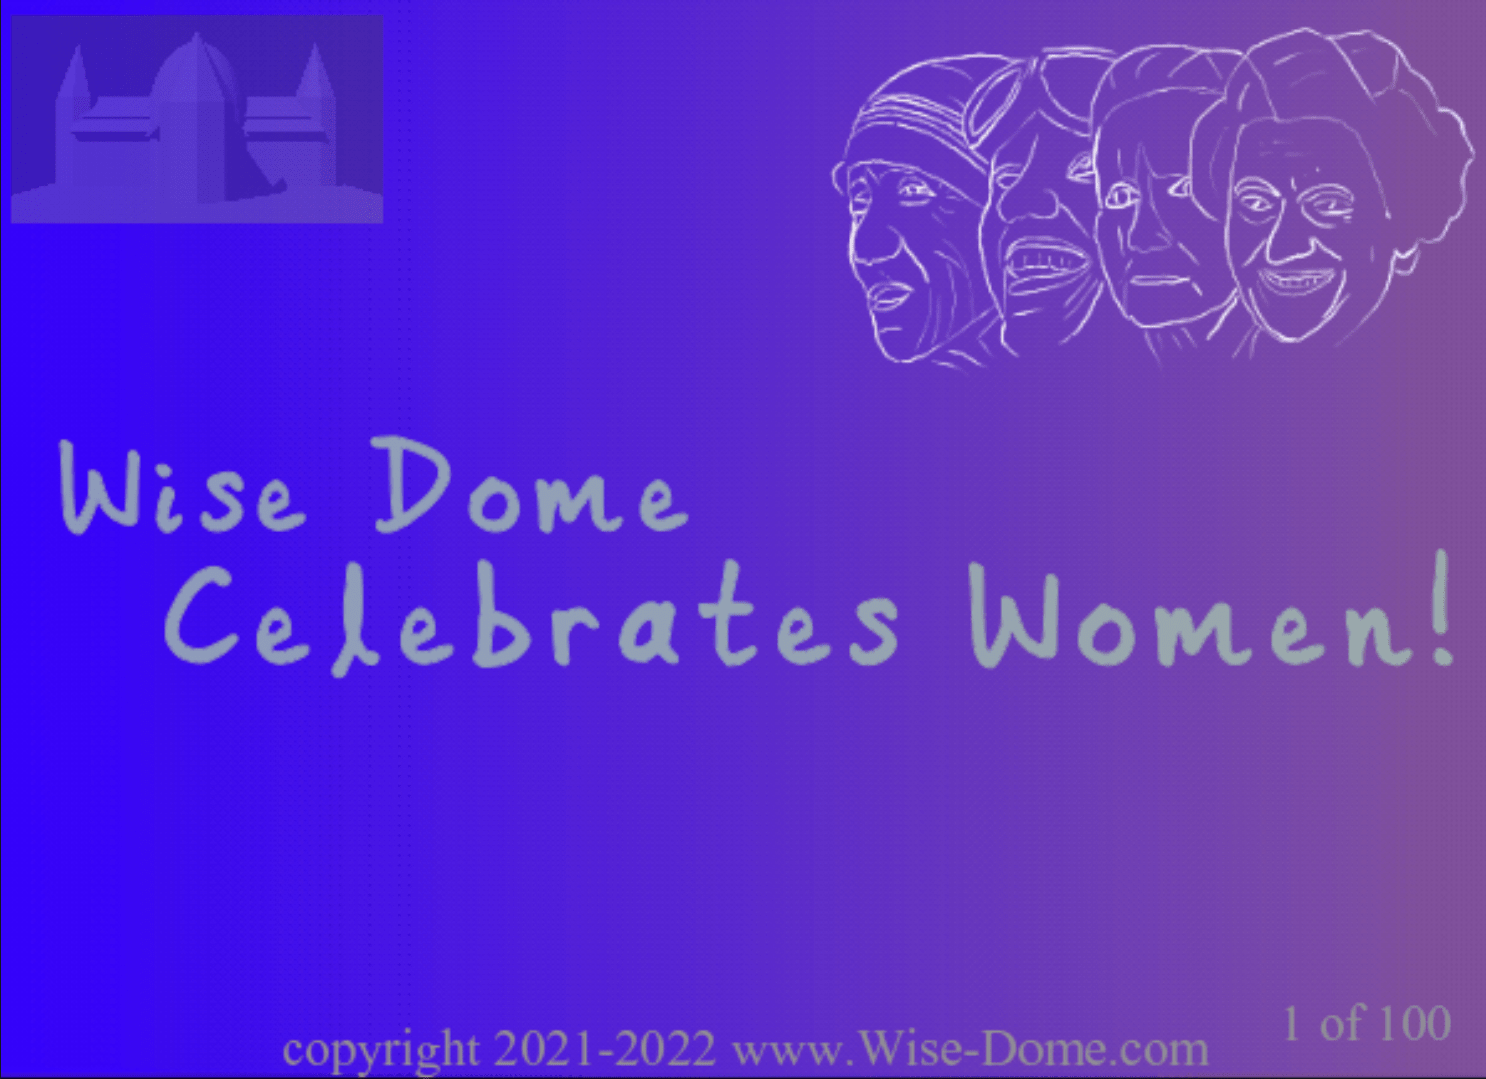 Women00001 - Celebrating International Women's Day!